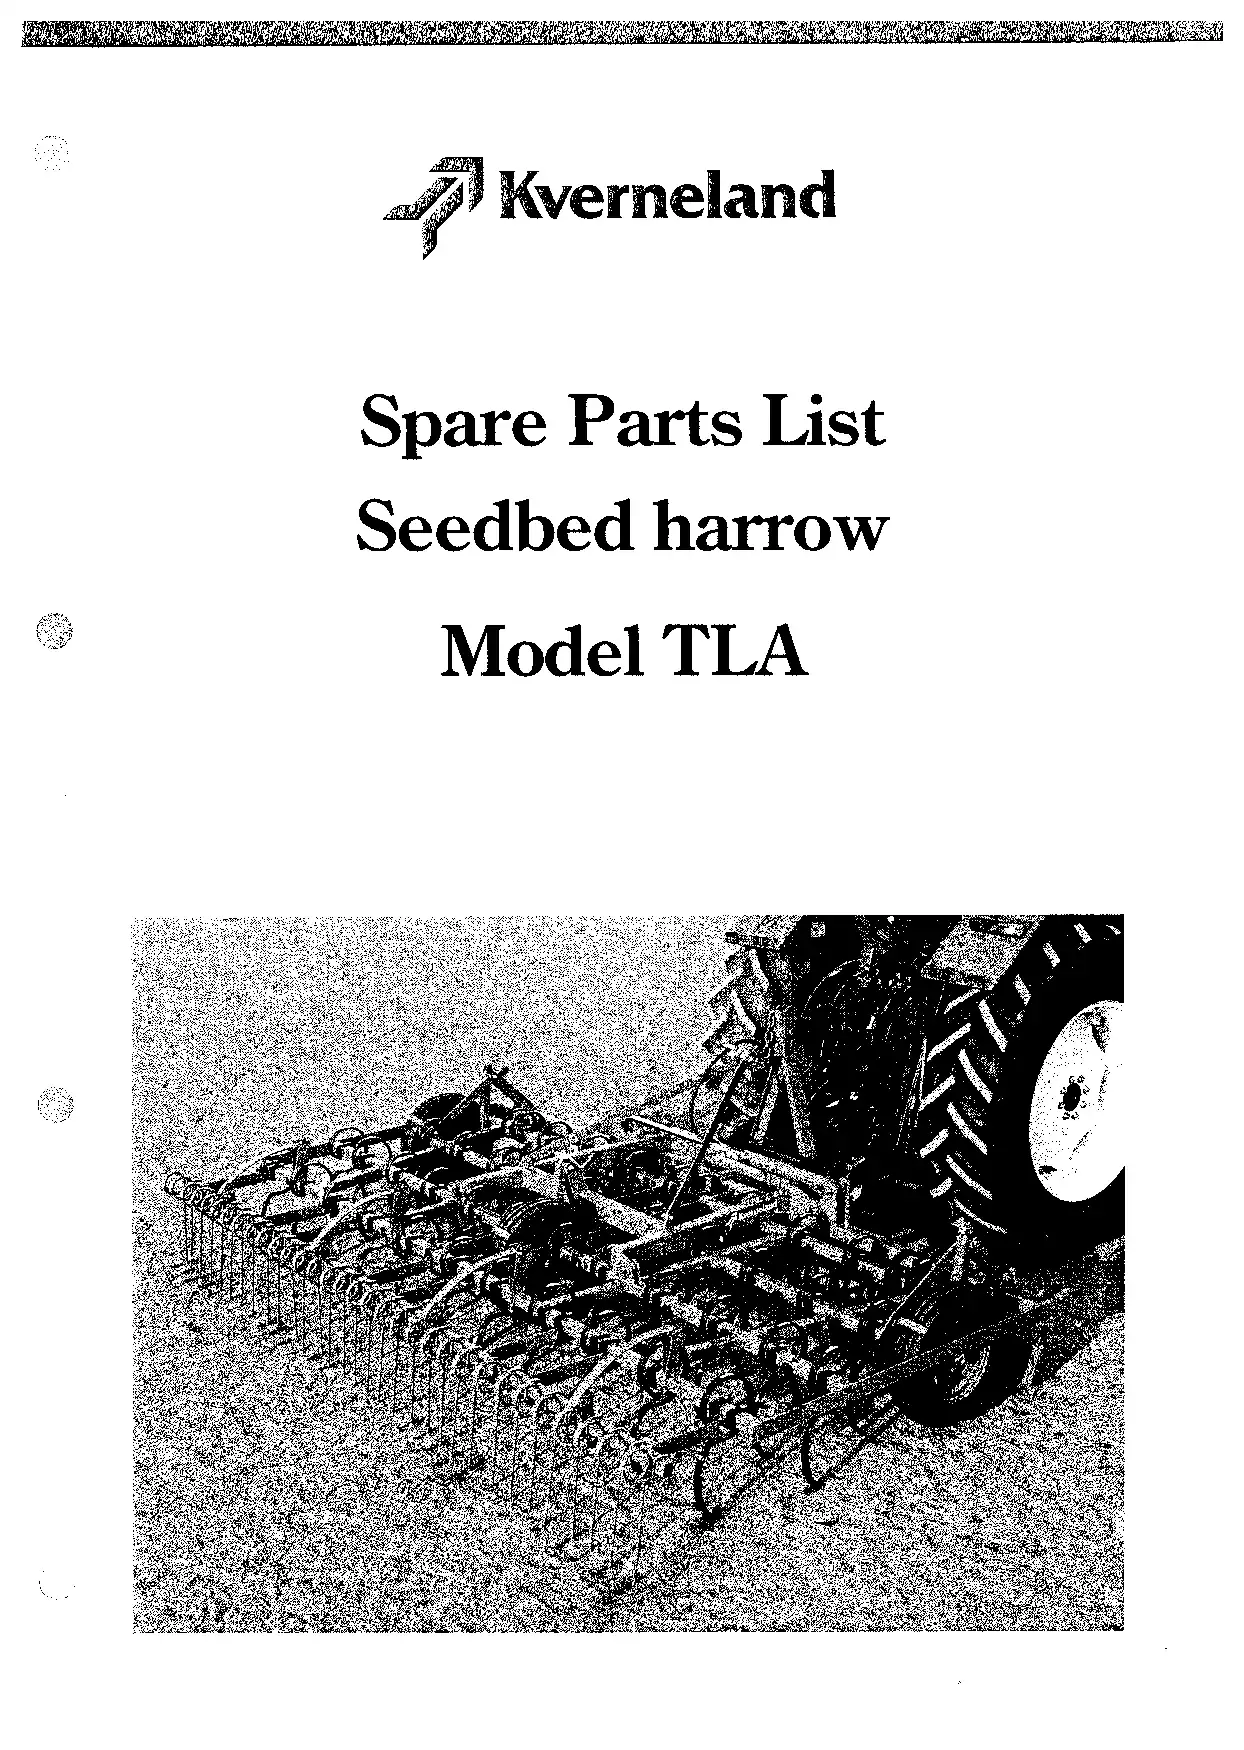 Kverneland TLA Seedbed harrow Parts Manual Catalog Pdf Download ...